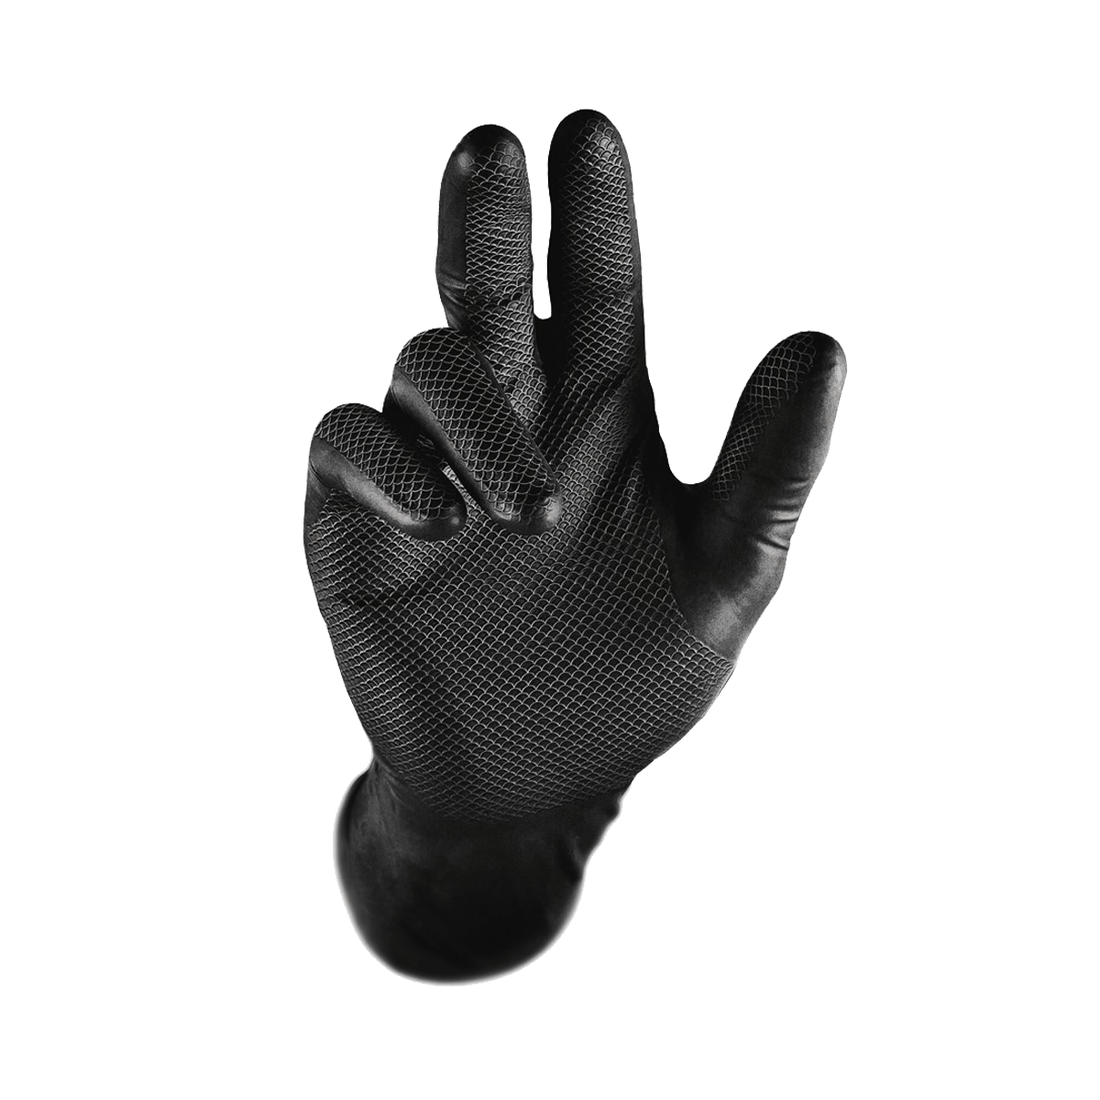 Grippaz Black Nitrile Disposable Gloves 50PK GPAZB